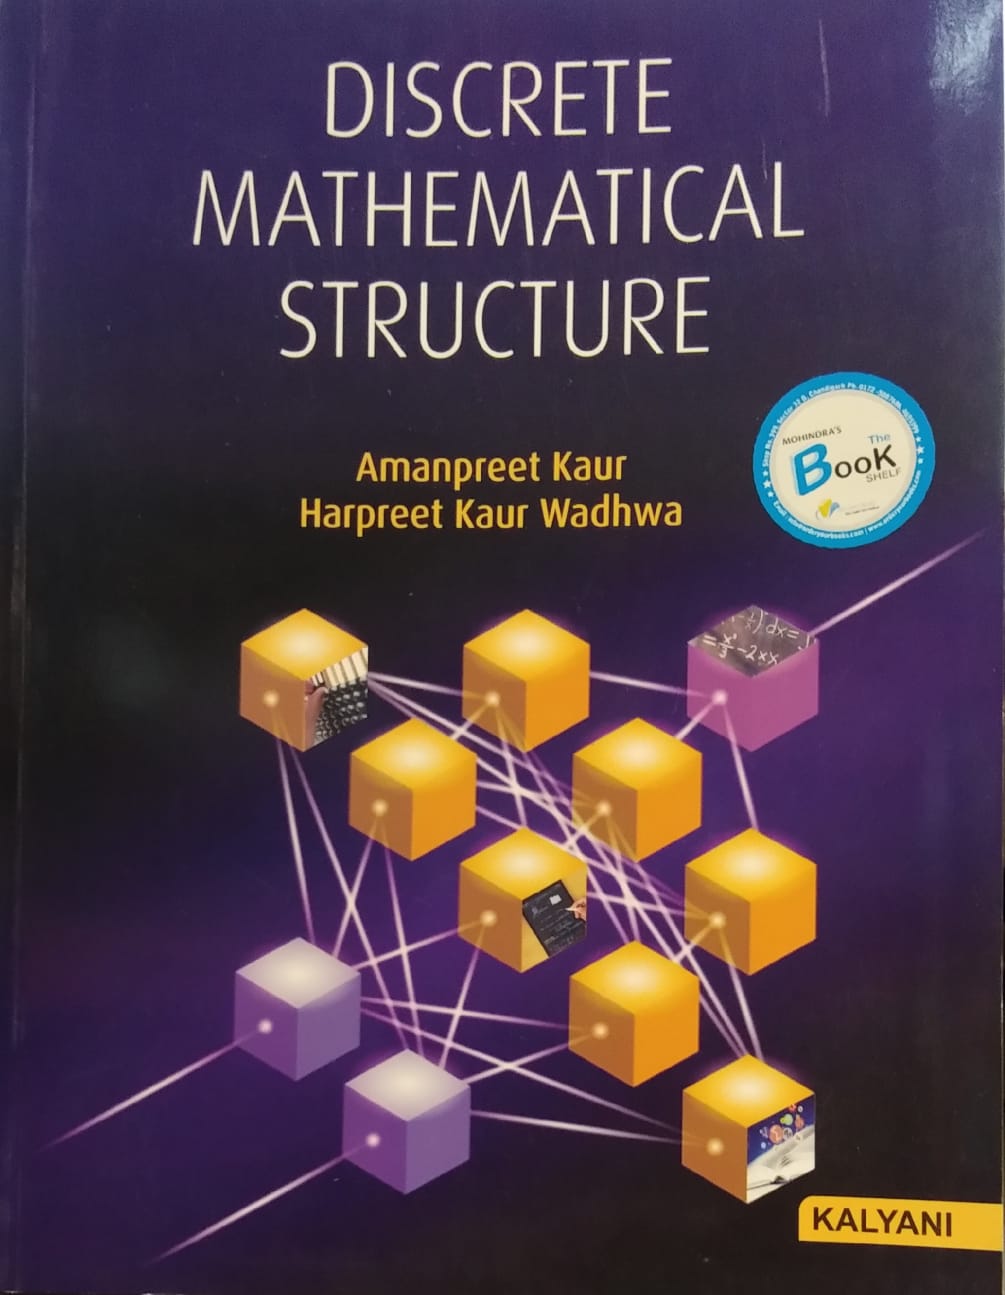 Discrete Mathematical Structure for B.C.A. Sem. Vth (P.U.) By Amanpreet Kaur & Harpreet Wadhwa Edition 2022